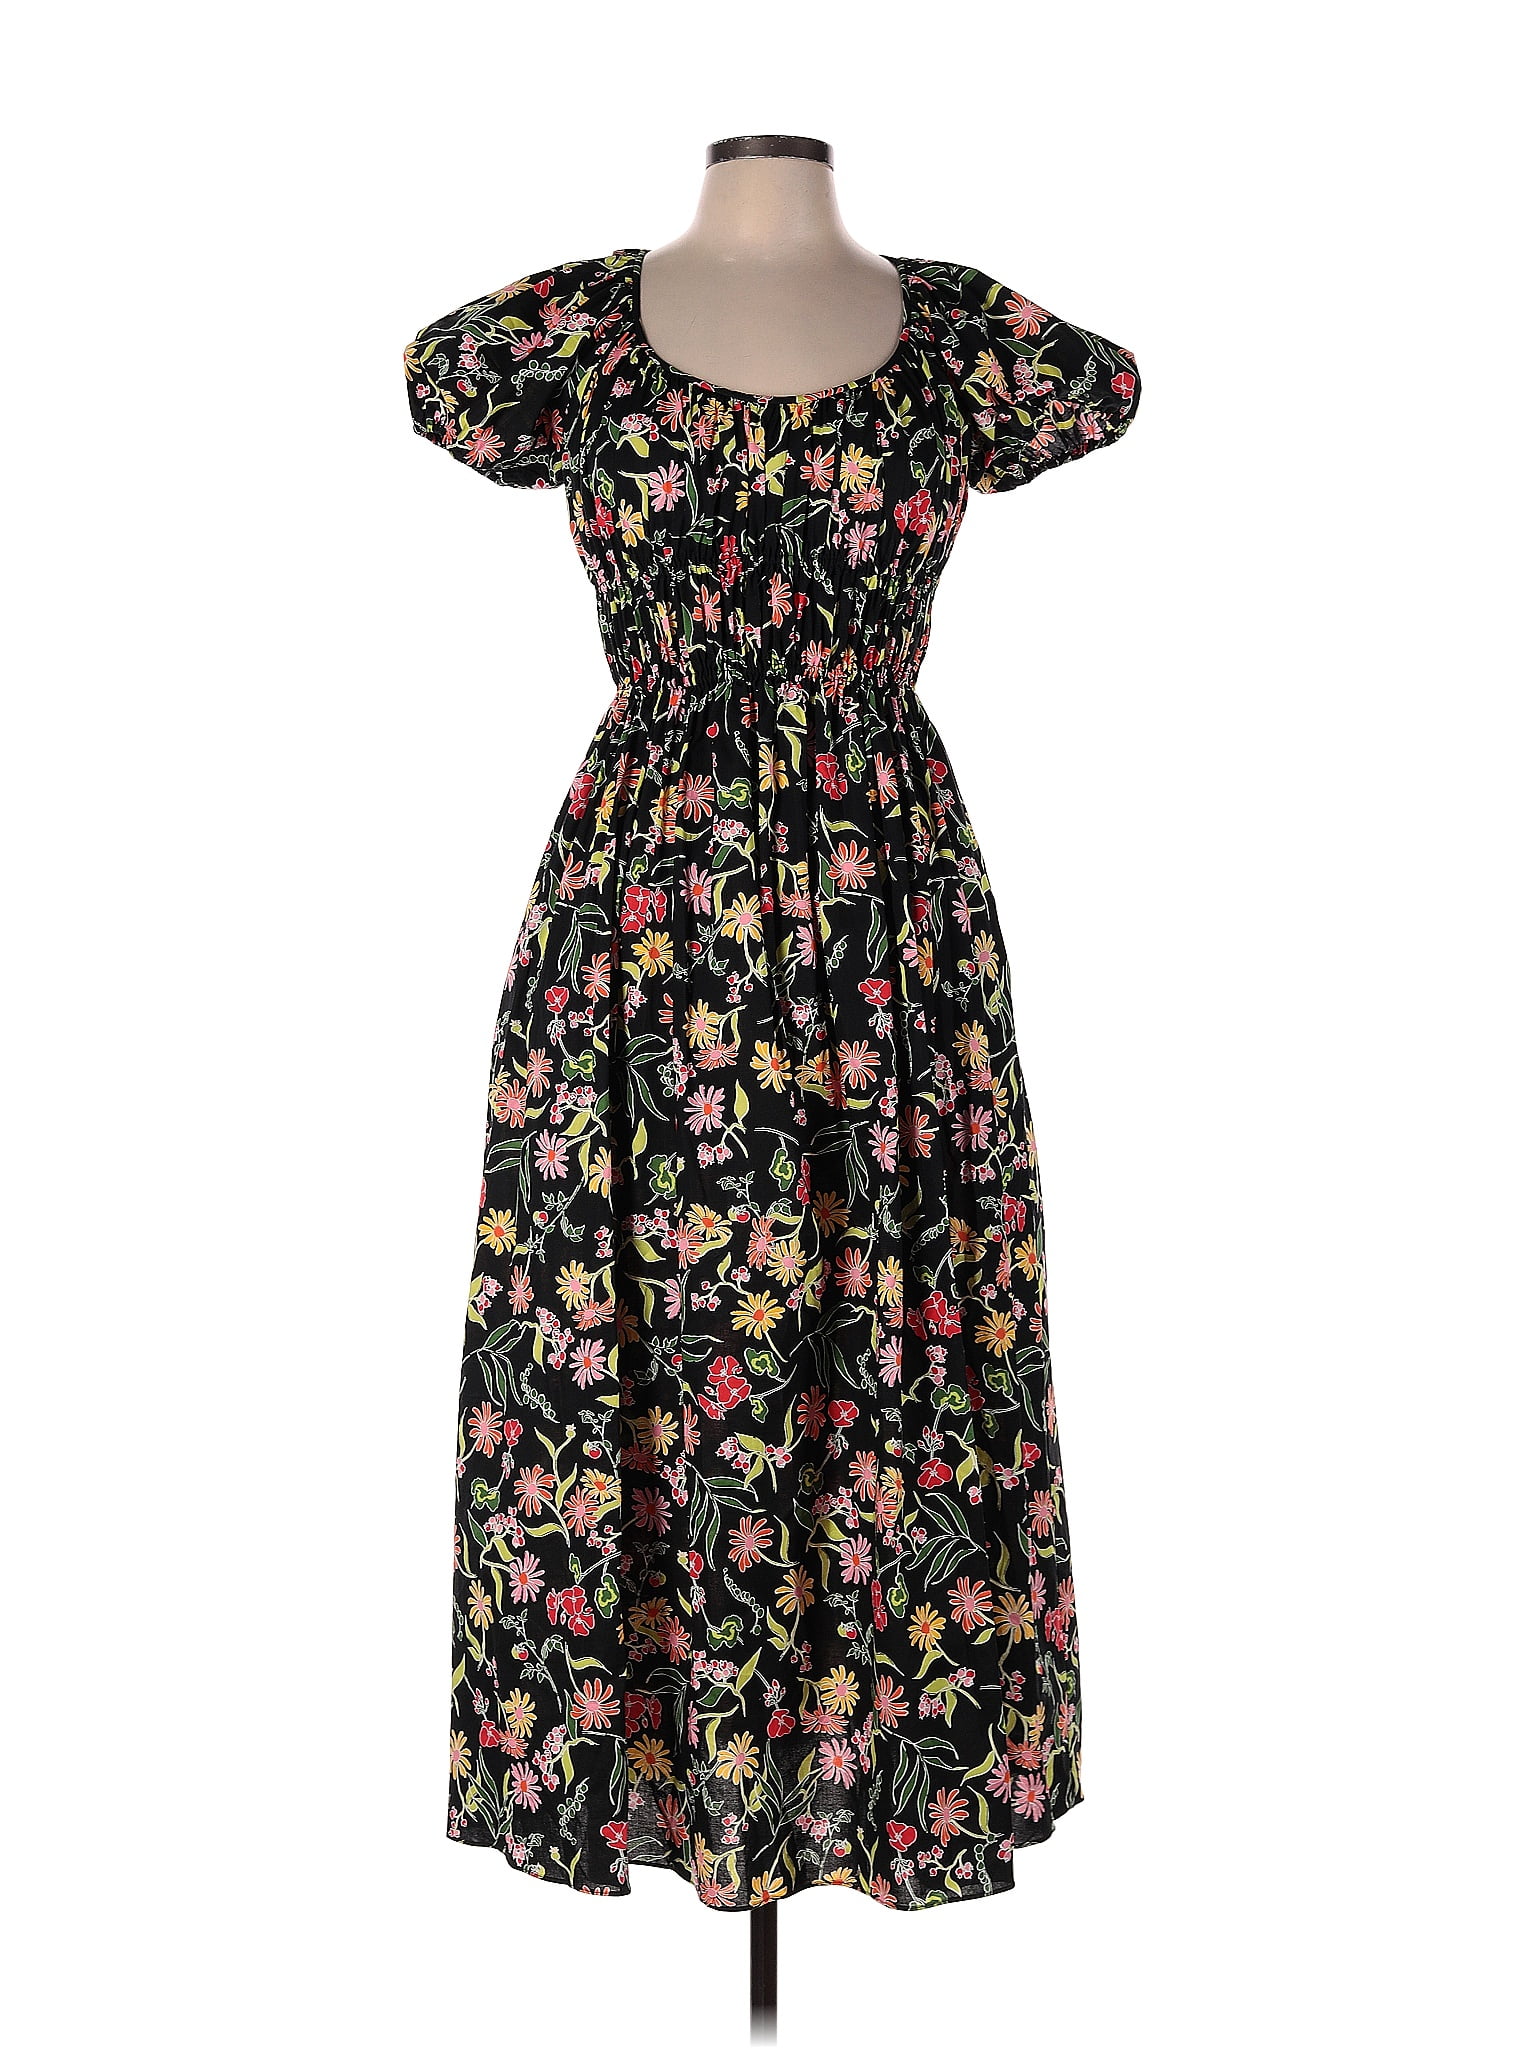 Kate Spade New York Floral Multi Color Black Casual Dress Size L - 68% ...